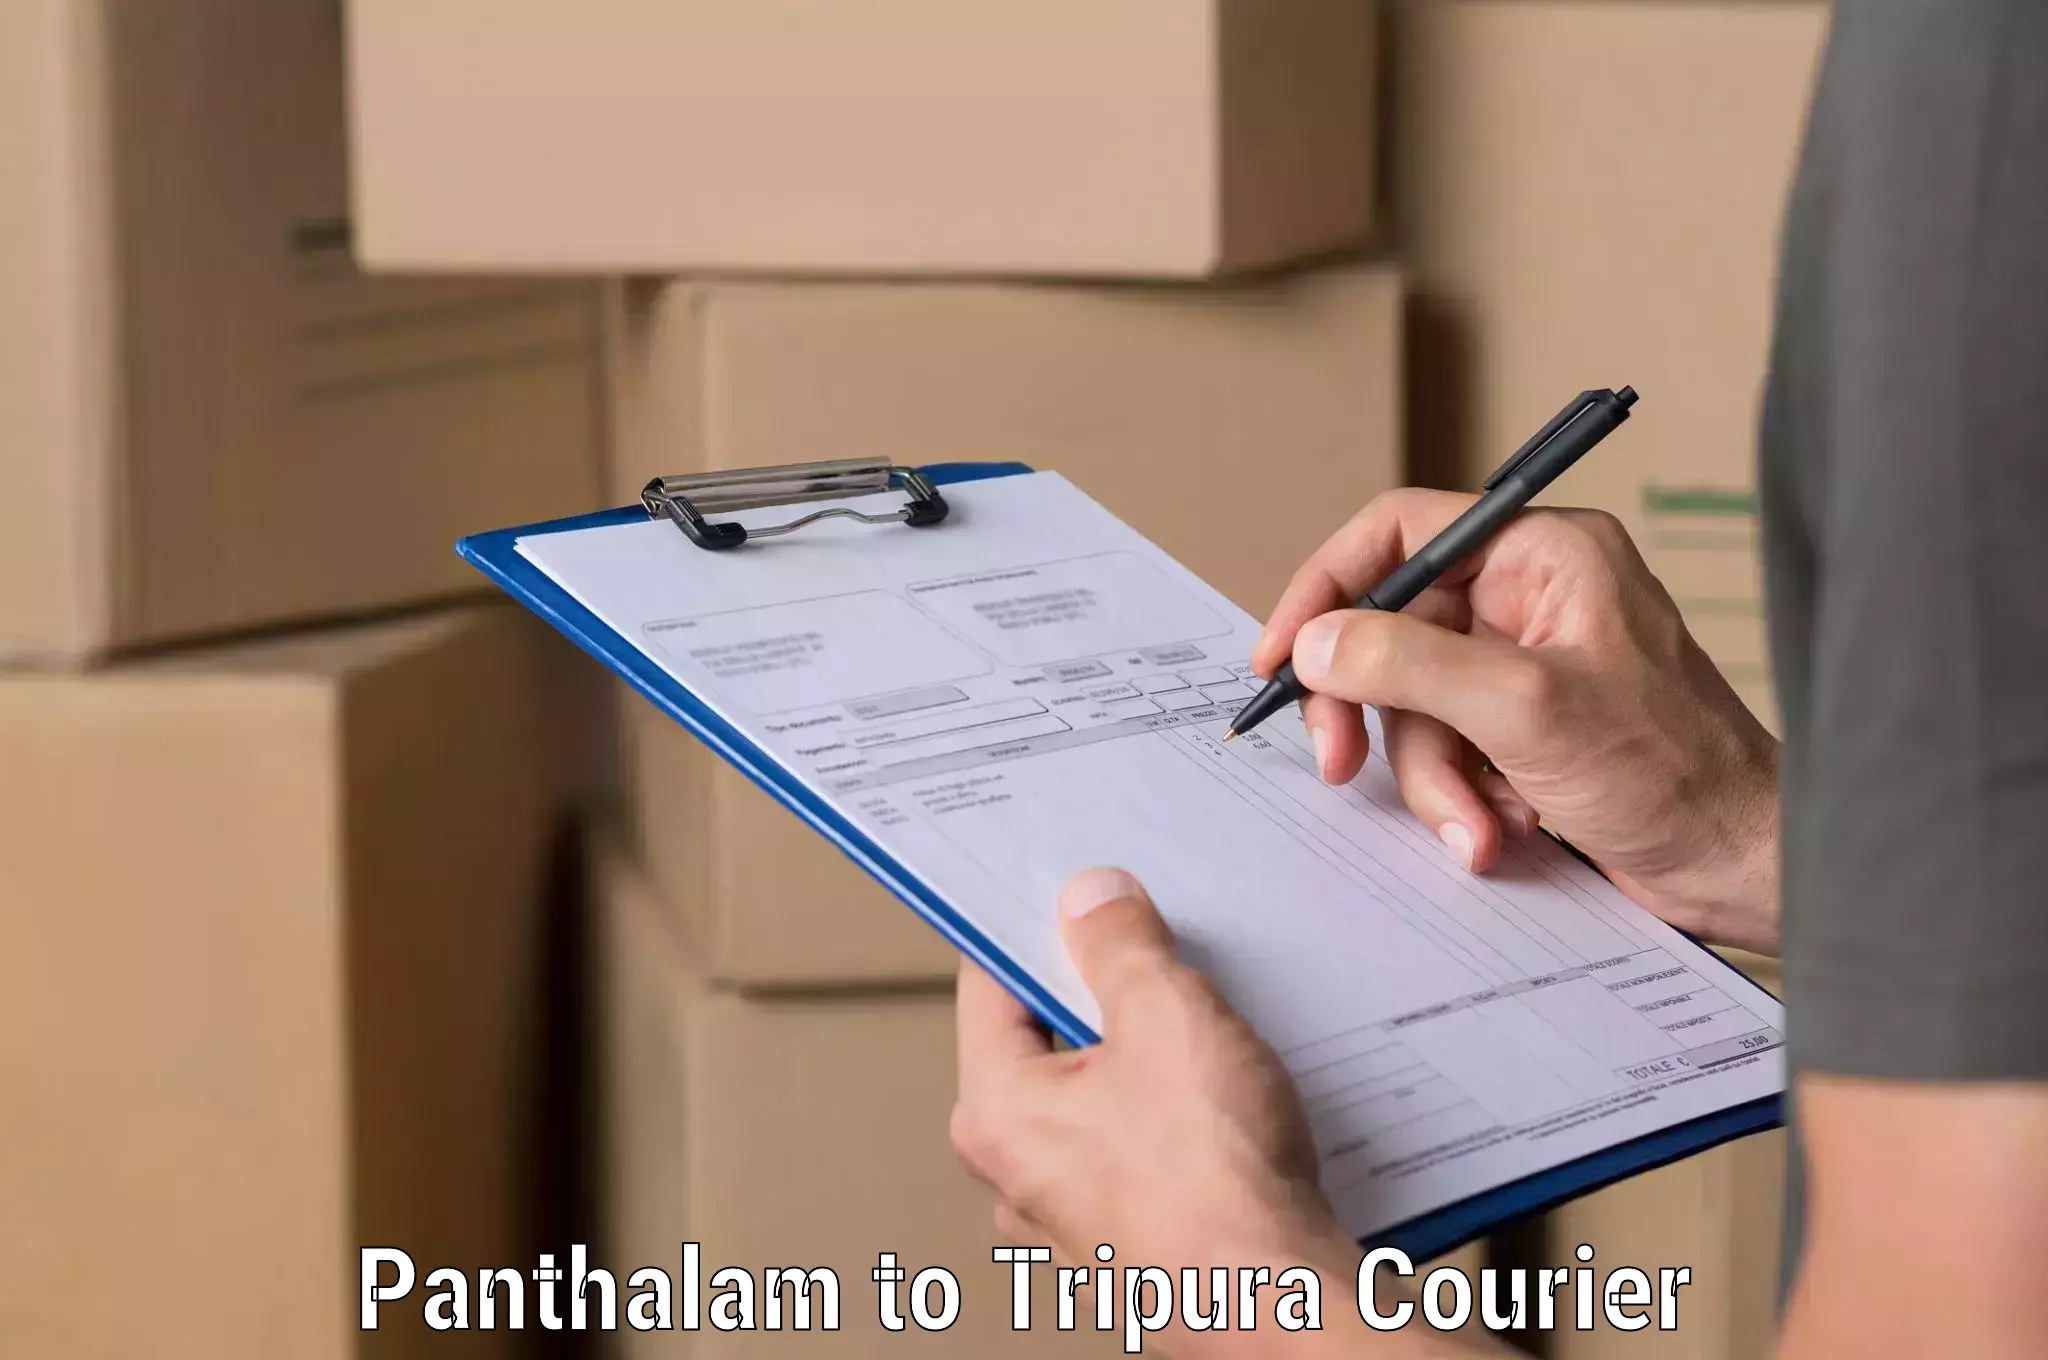 Courier service partnerships Panthalam to Udaipur Tripura